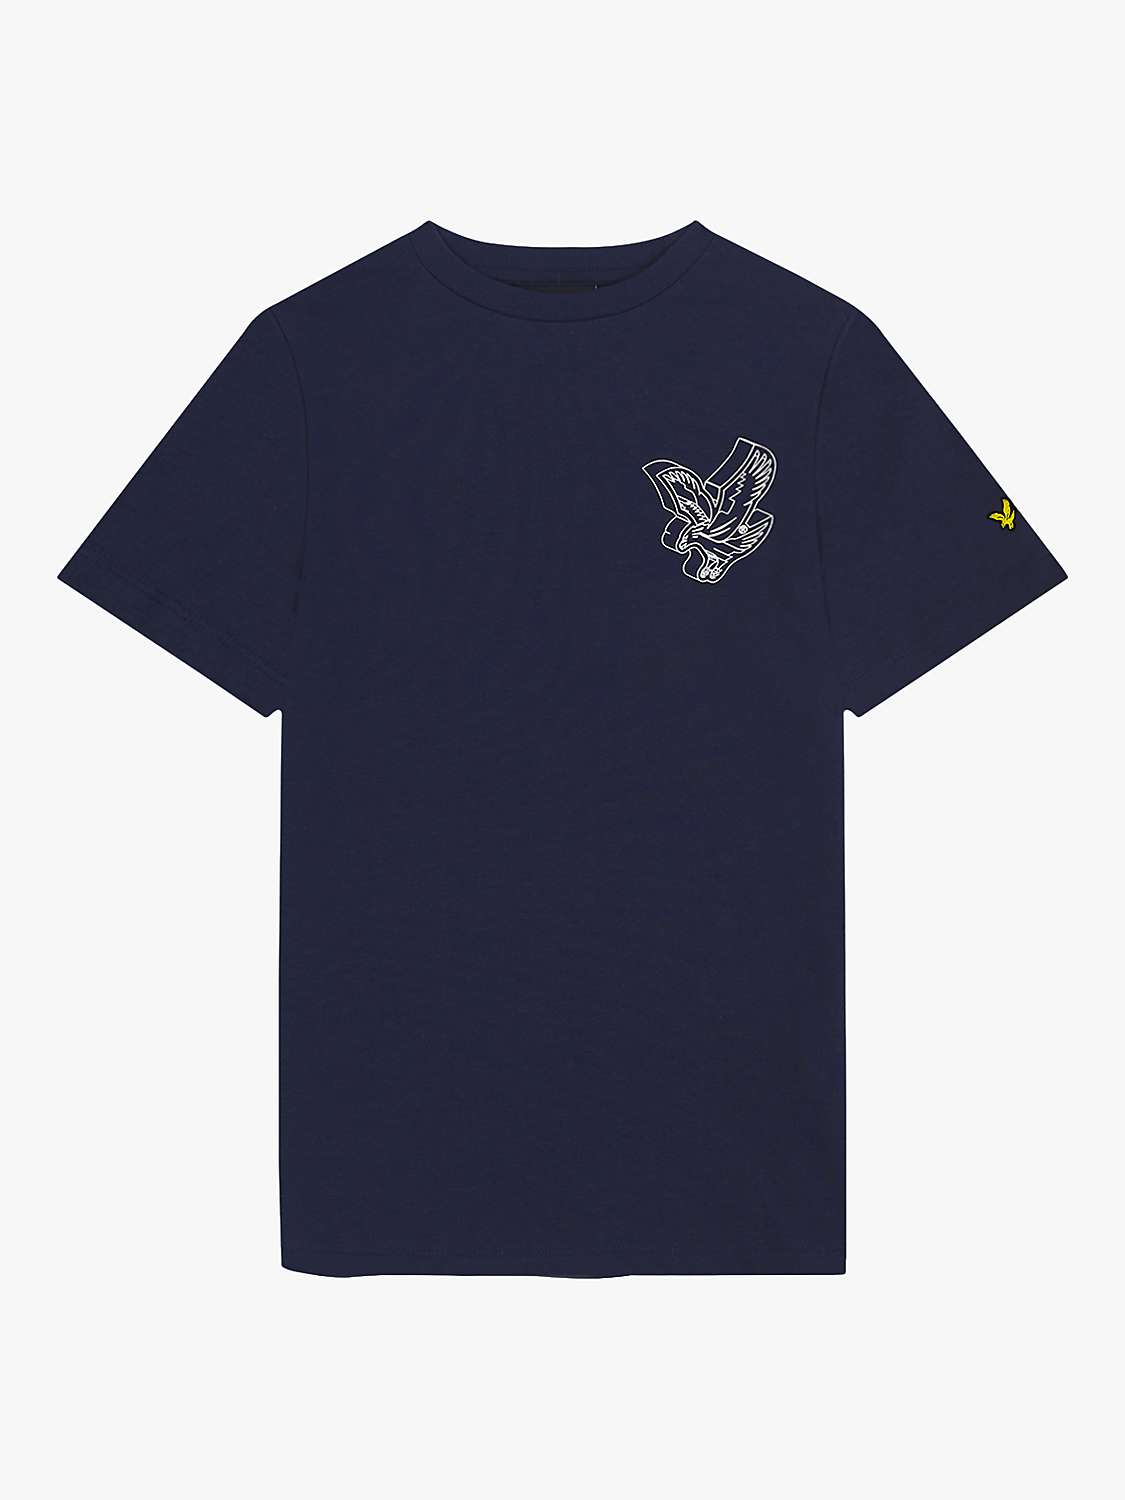 Buy Lyle & Scott Kids' 3D Eagle Graphic T-Shirt, Navy Online at johnlewis.com